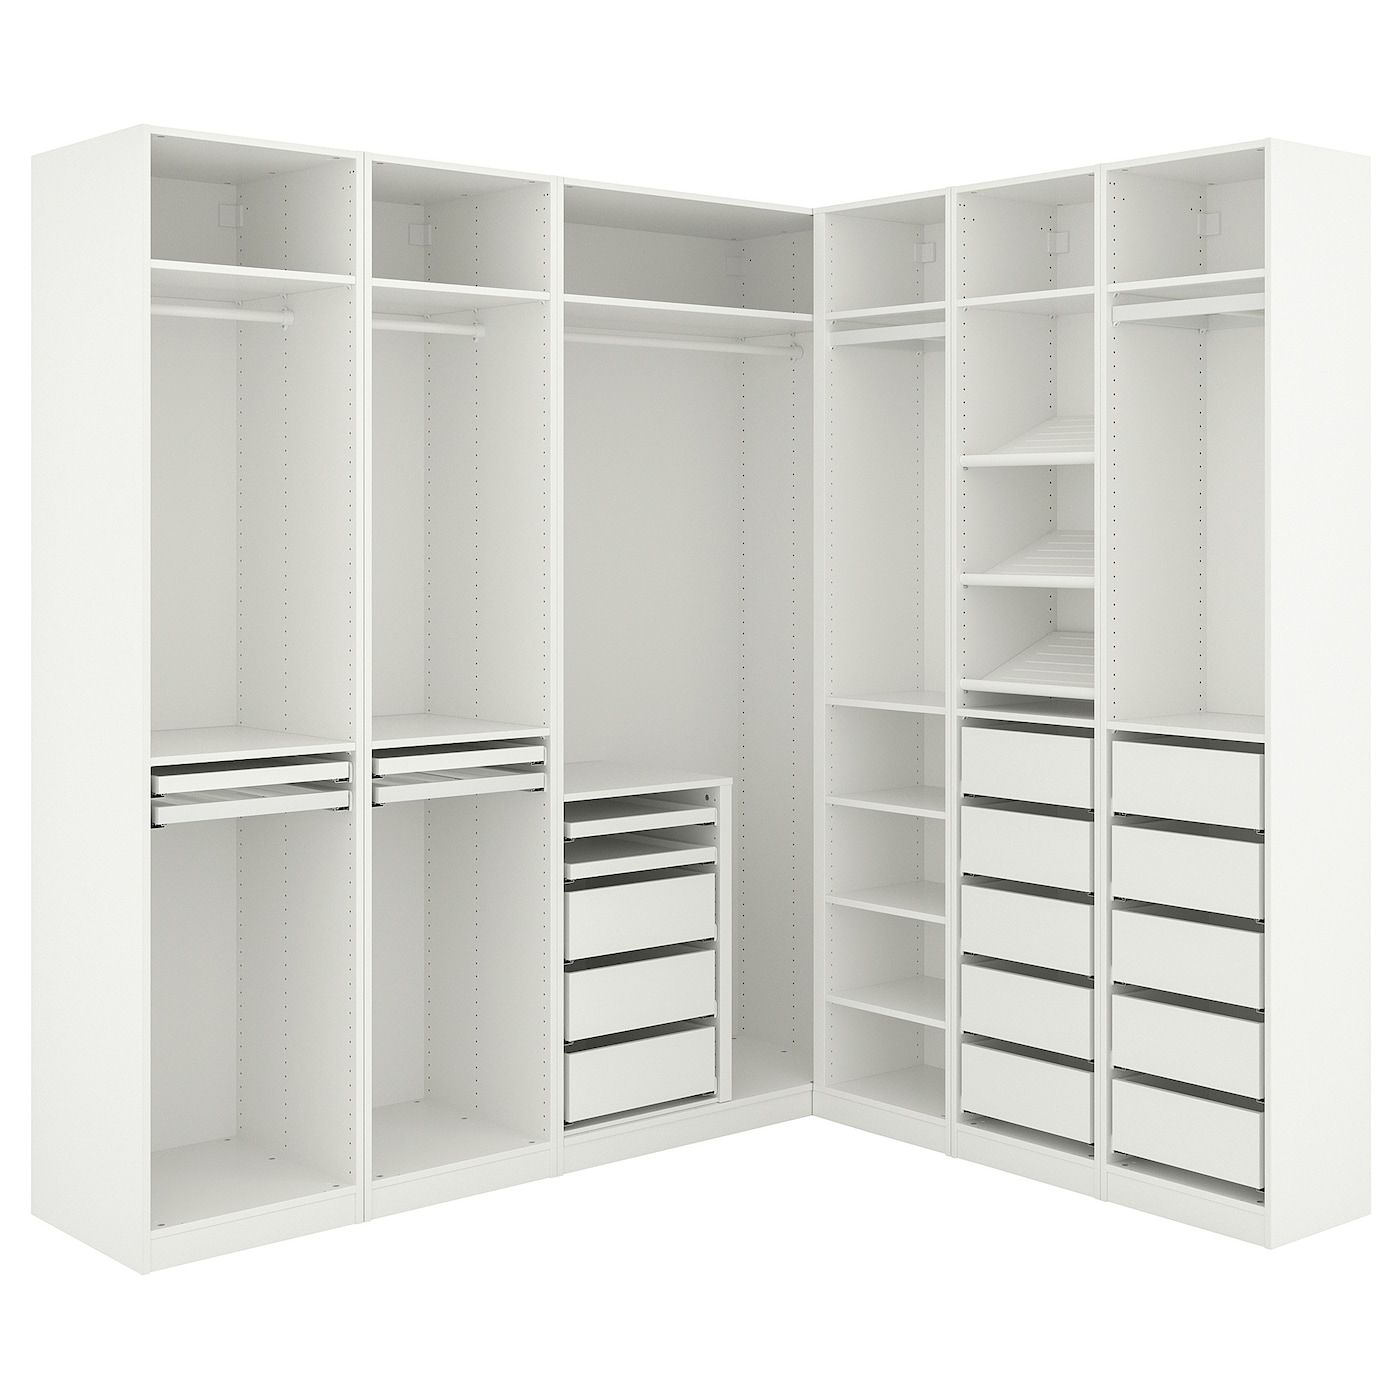 Pax Corner Wardrobe, White, 827/8/837/8x927/8" – Ikea With Regard To Small Corner Wardrobes (Gallery 15 of 20)